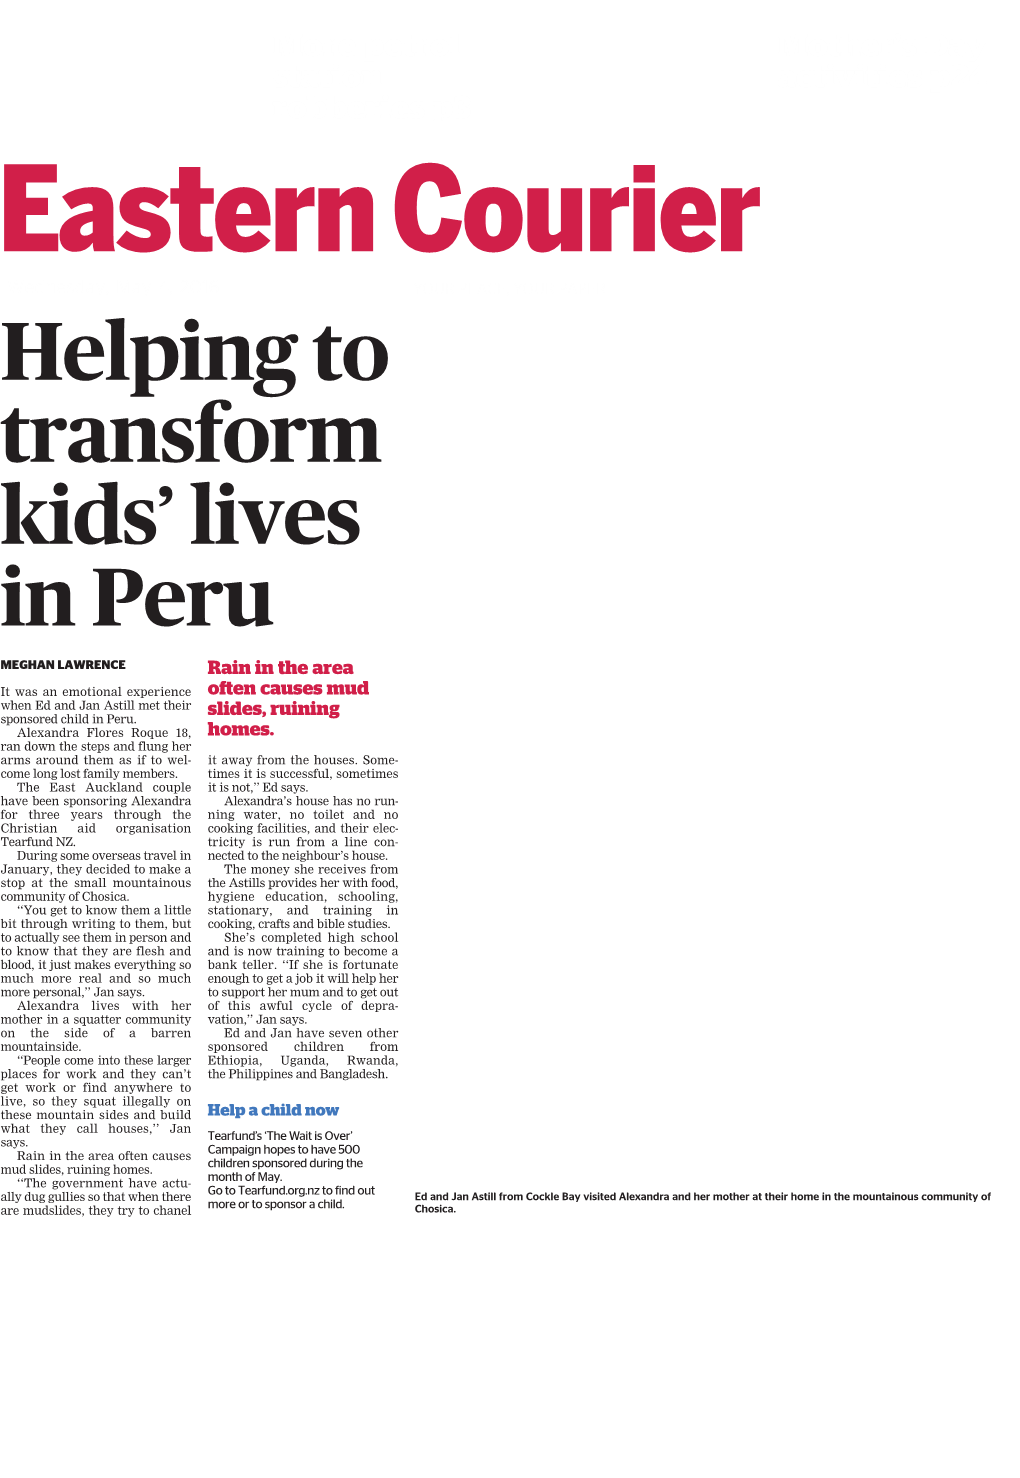 Helping to Transform Kids' Lives in Peru